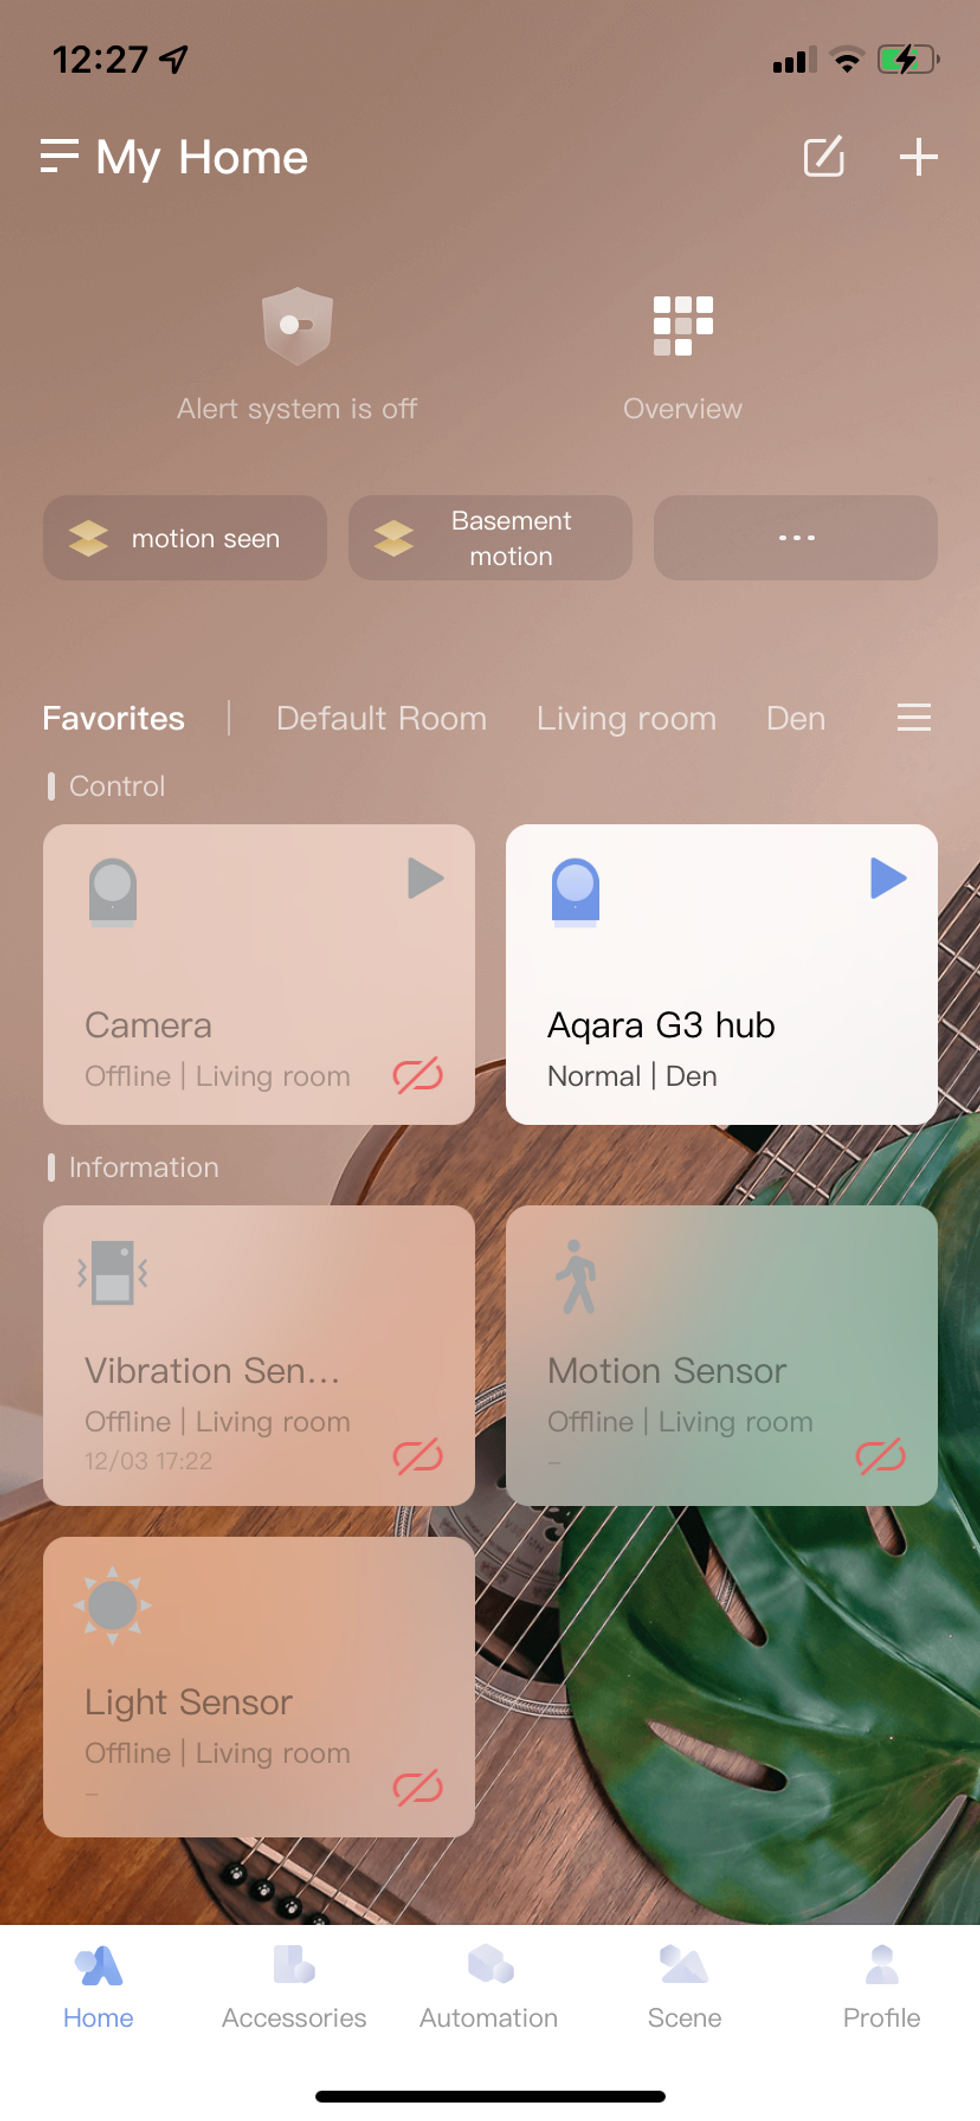 Home screen of aqara app